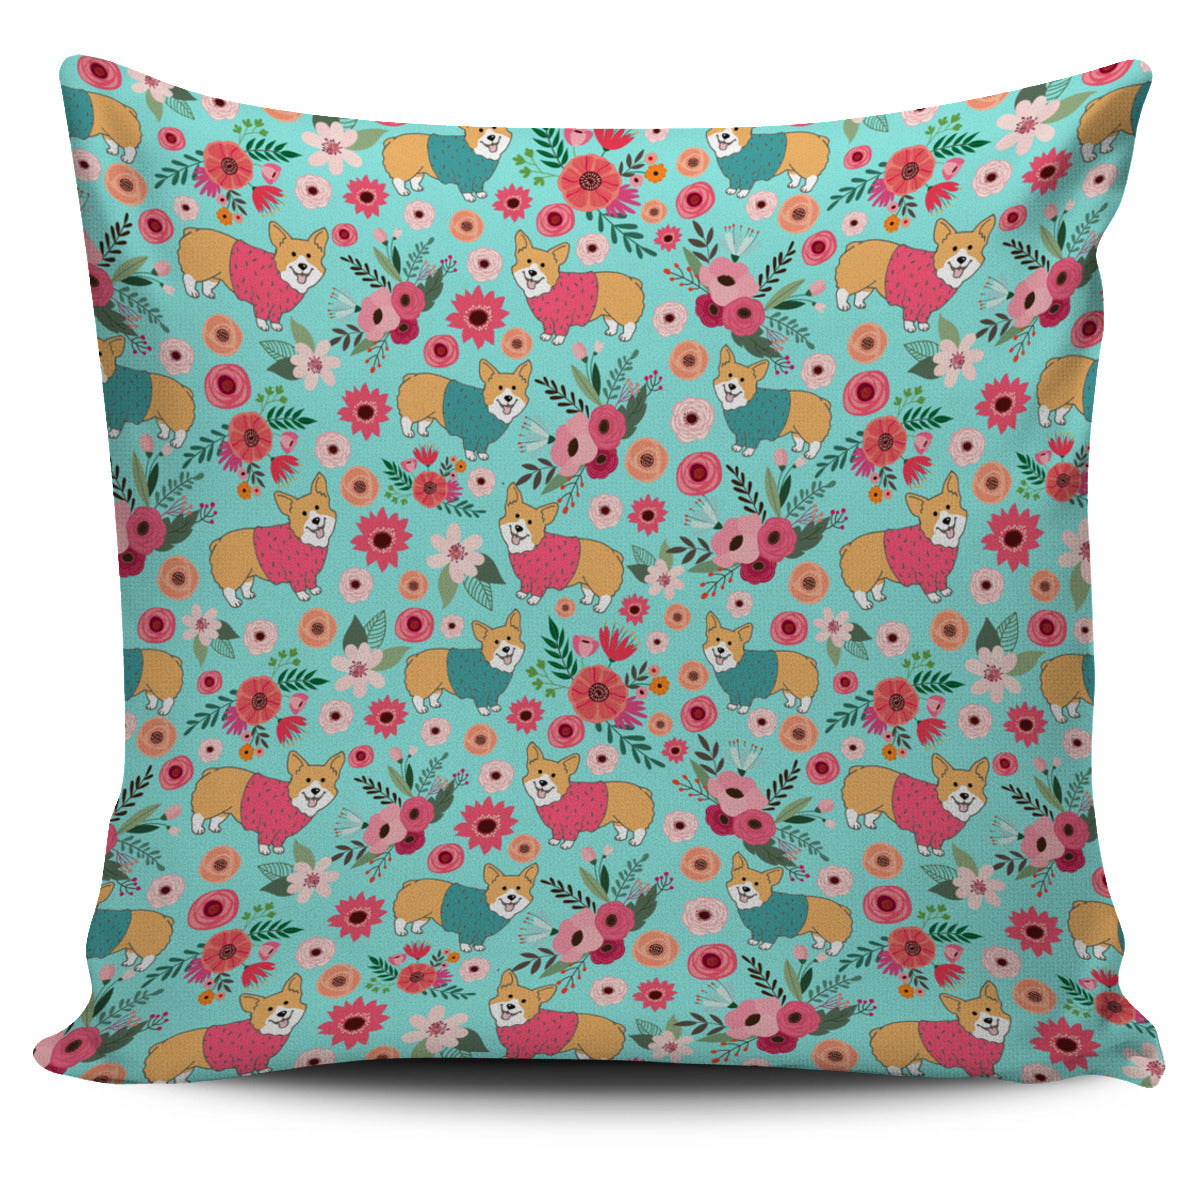 Corgi Flower Pillow Cover